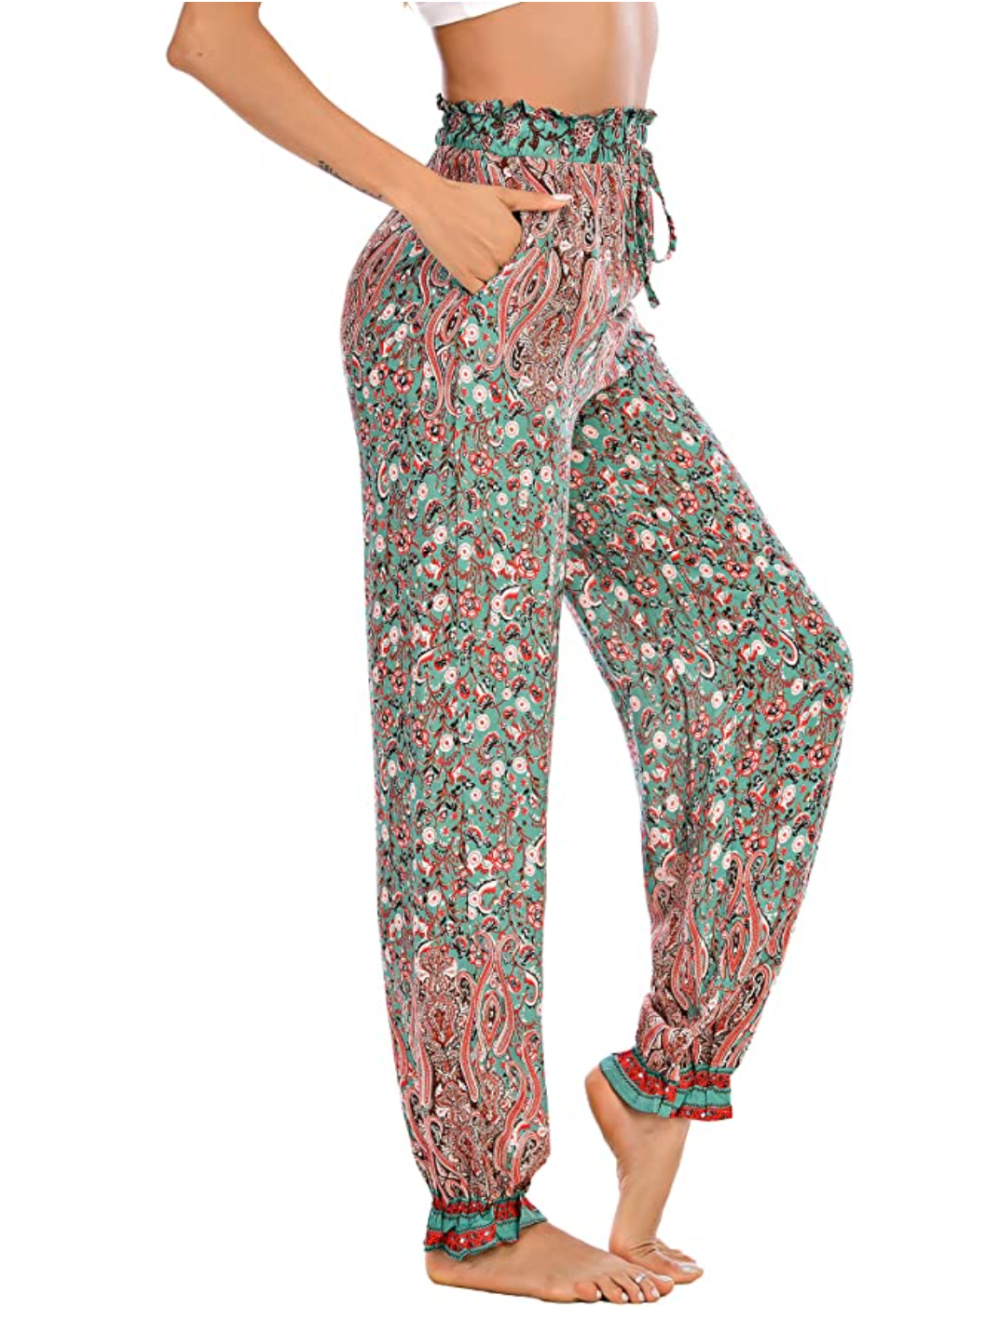 Love Welove Fashion Women's Summer Printed Yoga Harem Pants